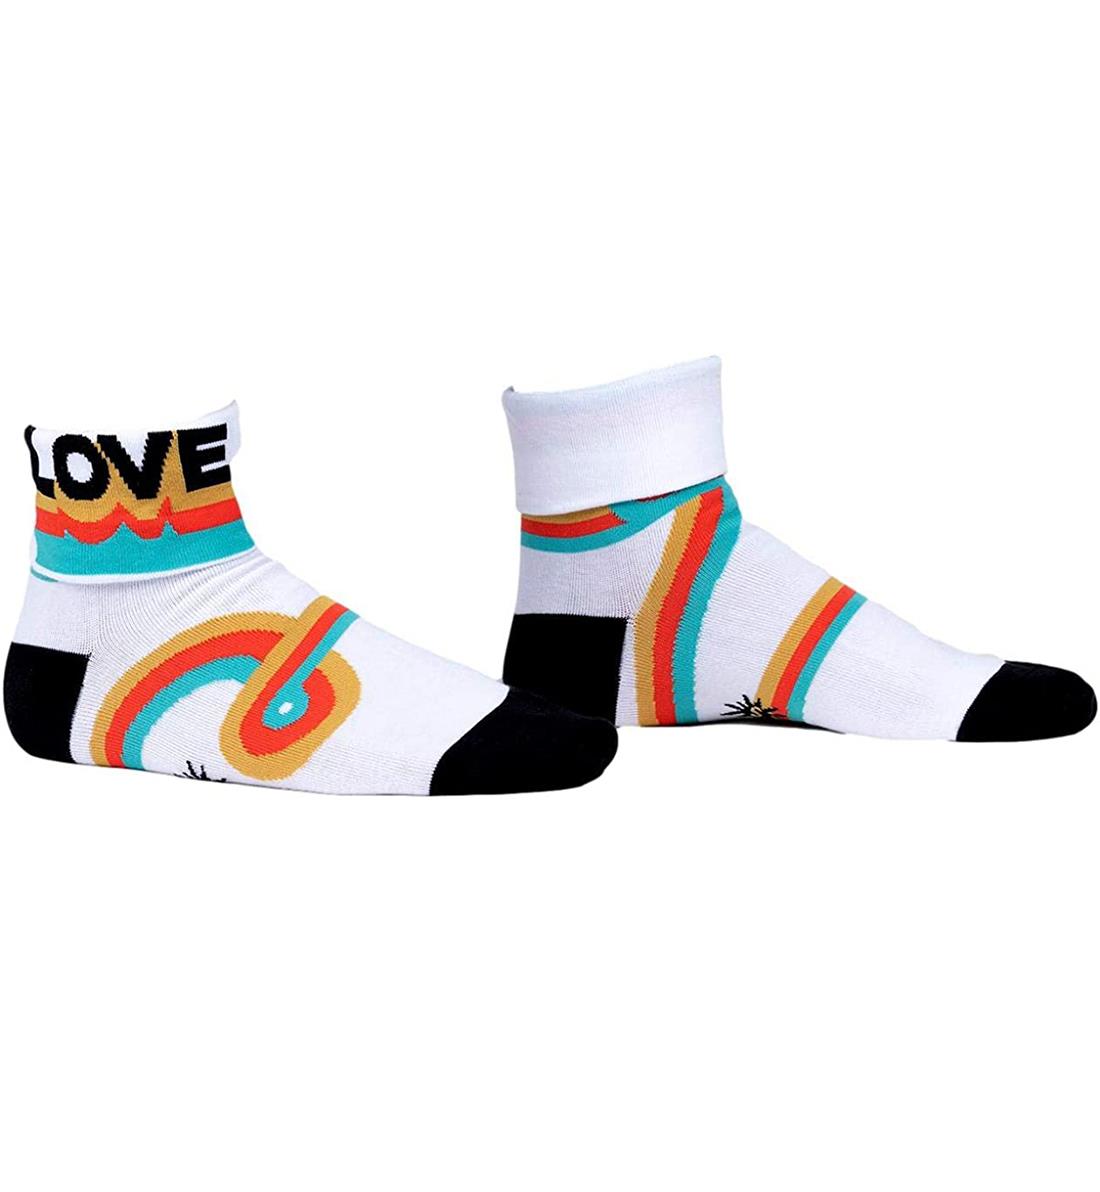 SOCK it to me 2-Way Turn Cuff Crew Socks (q0010),Groovy Love - Groovy Love,One Size